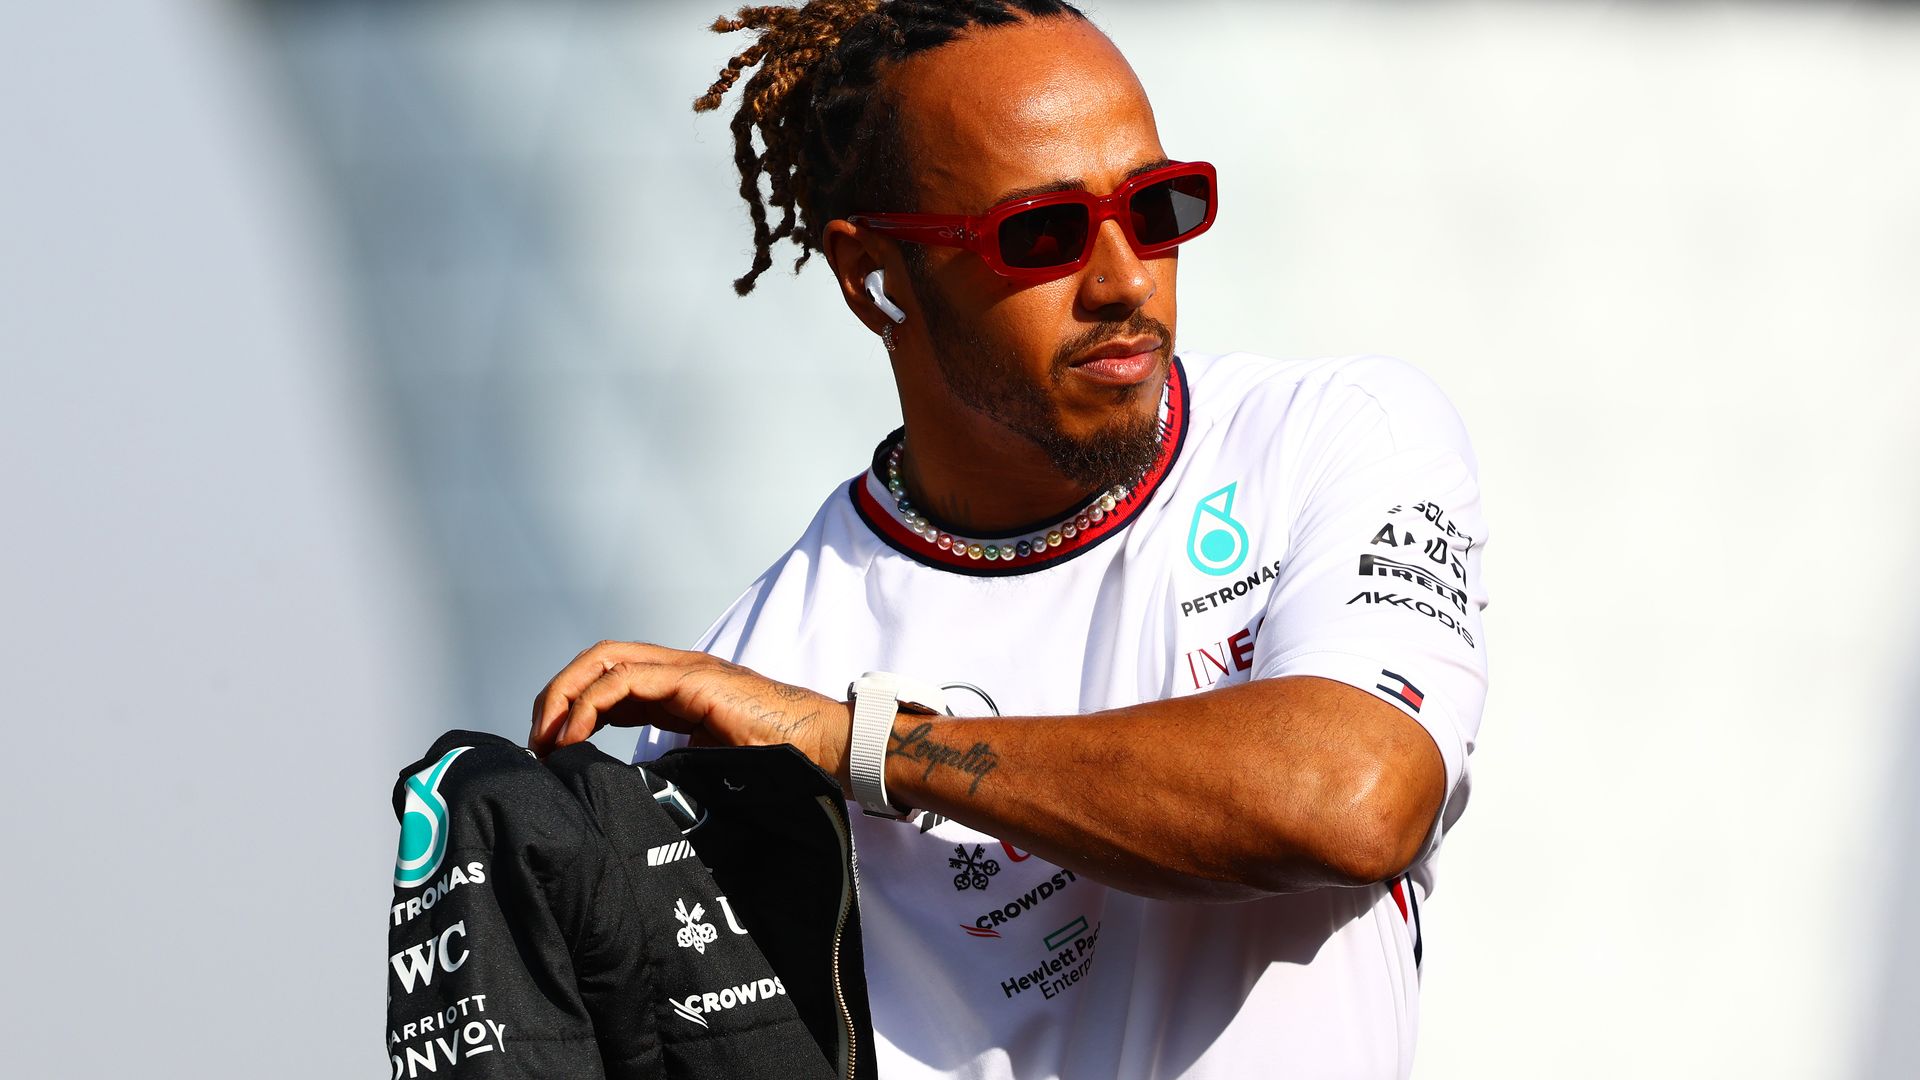 What is Lewis Hamilton's net worth?